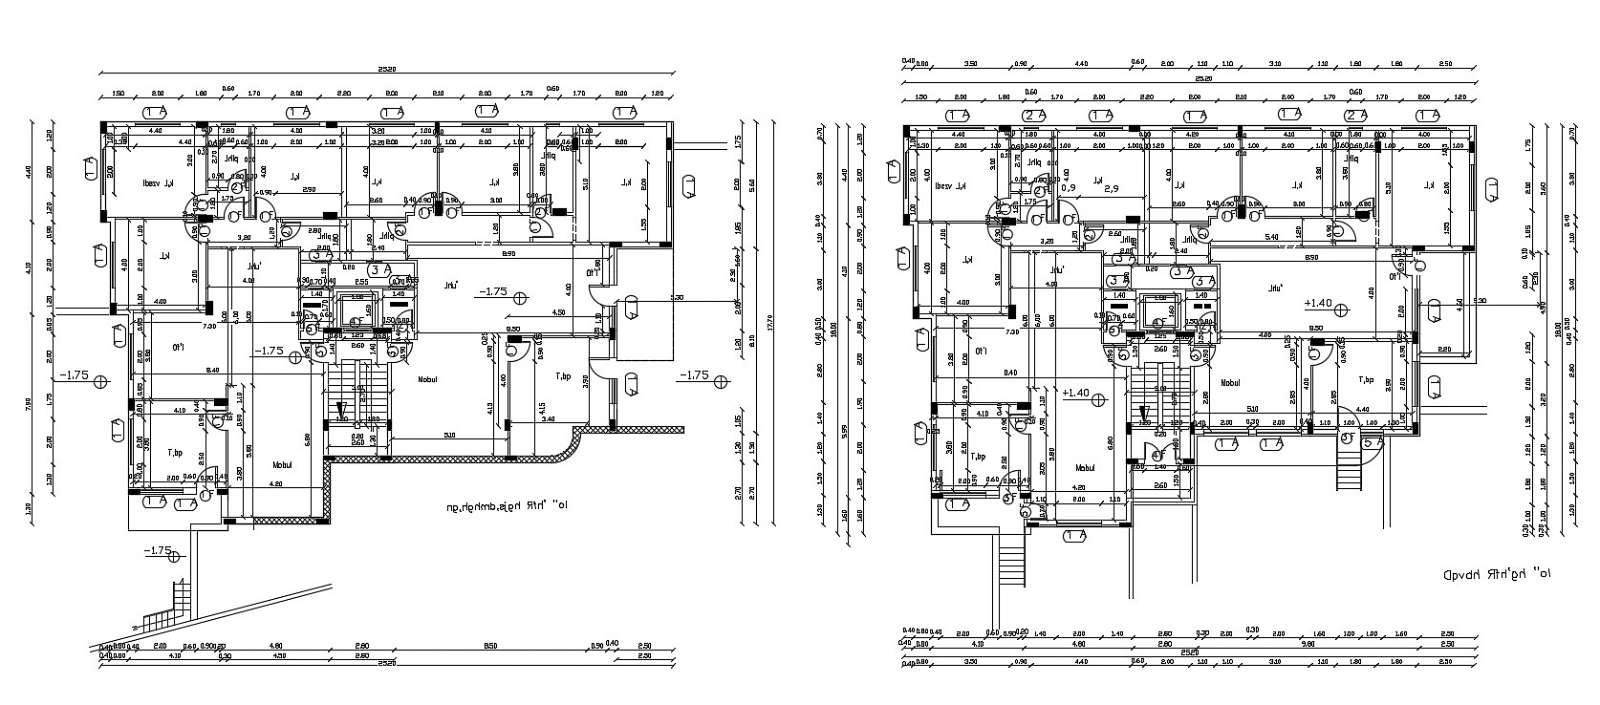 3 Bedroom Floor Plan With Dimensions DWG File Cadbull